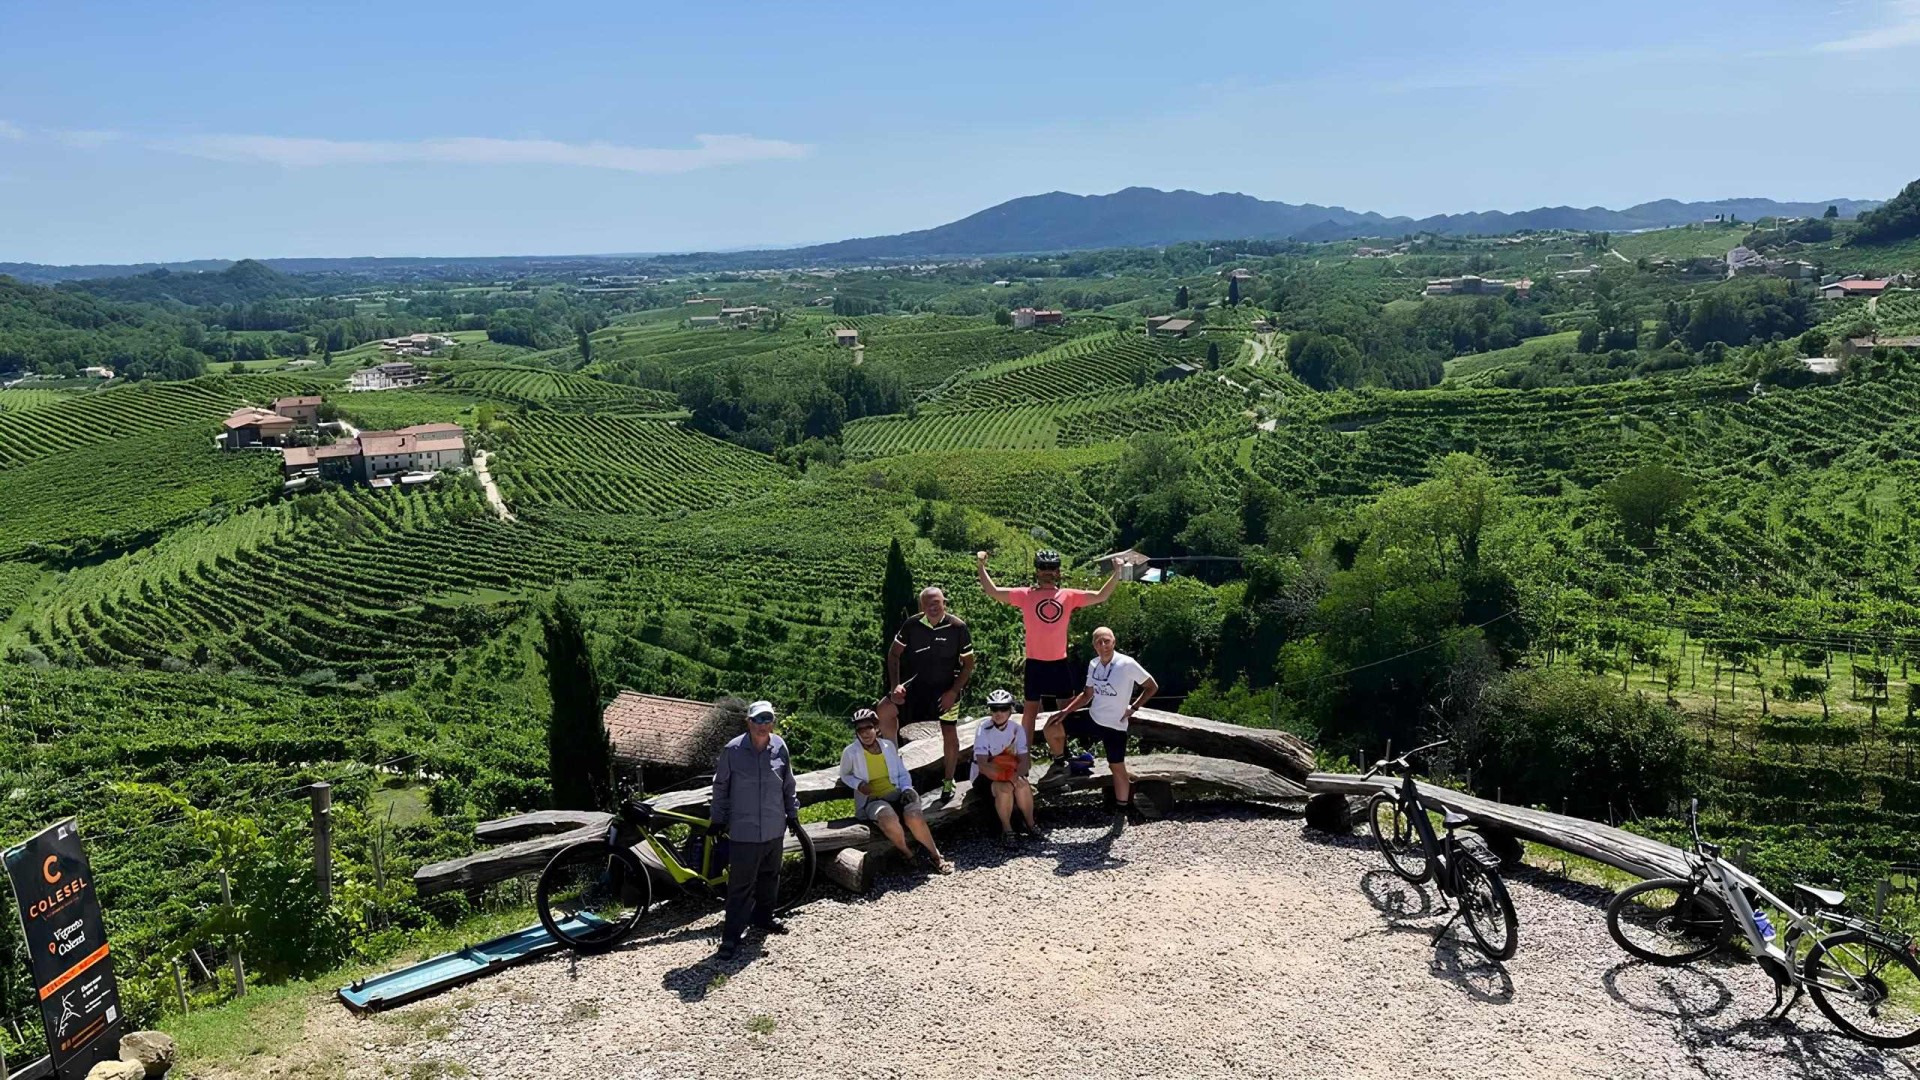 Bike week in Veneto: between villas, walled cities and the Prosecco hills